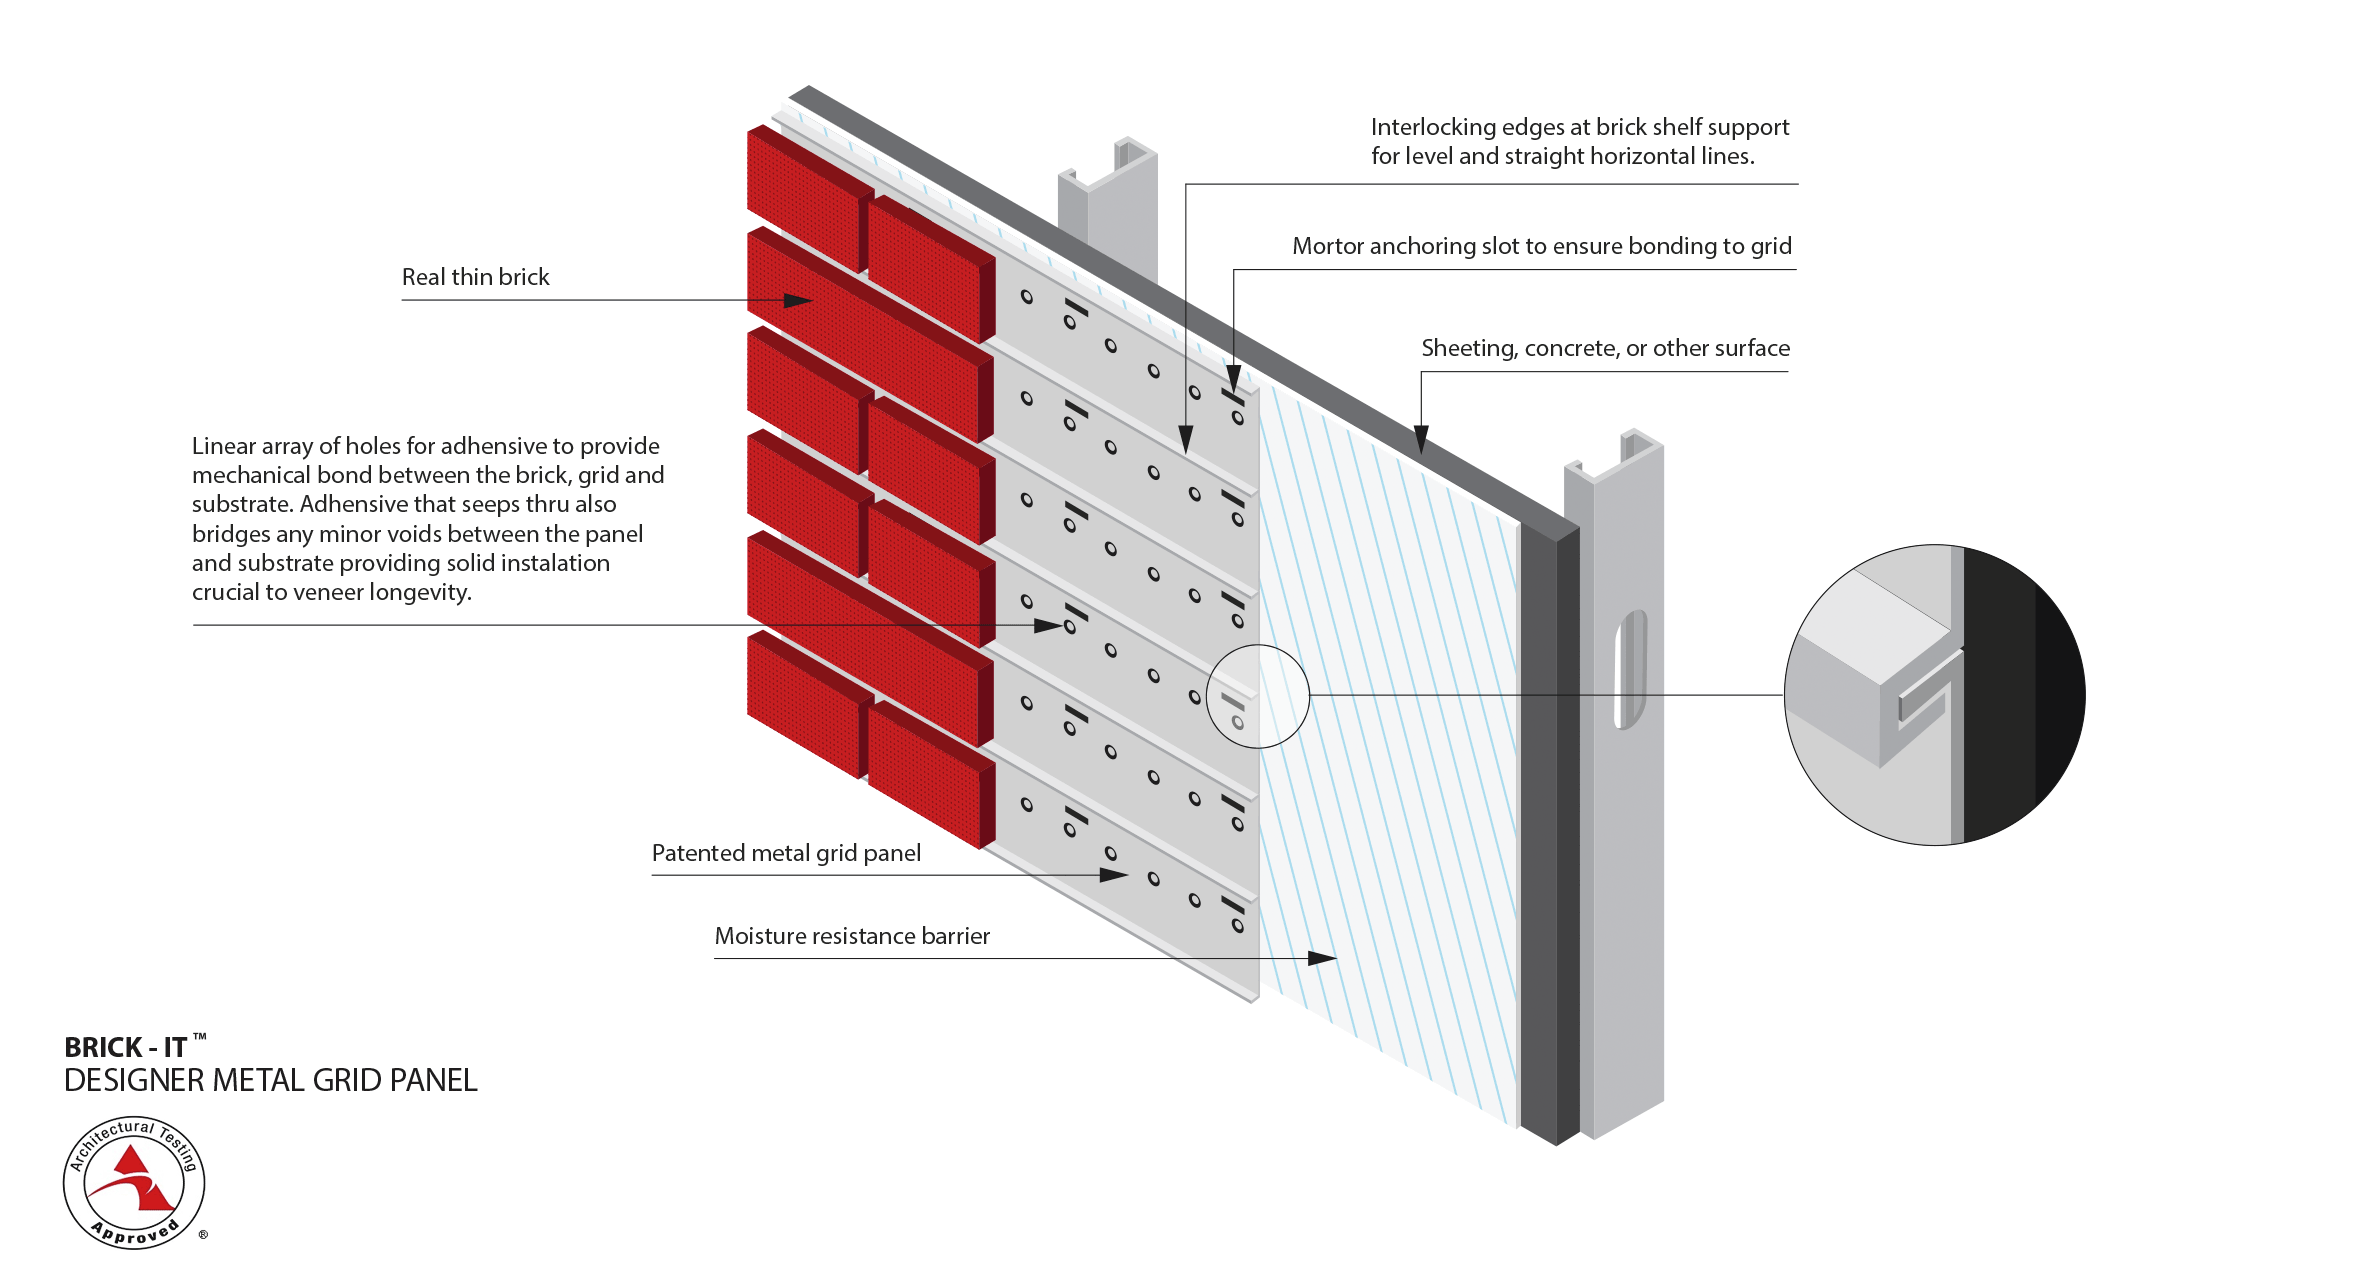 Brick-It™ Designer Metal Grid Panel (DMG)